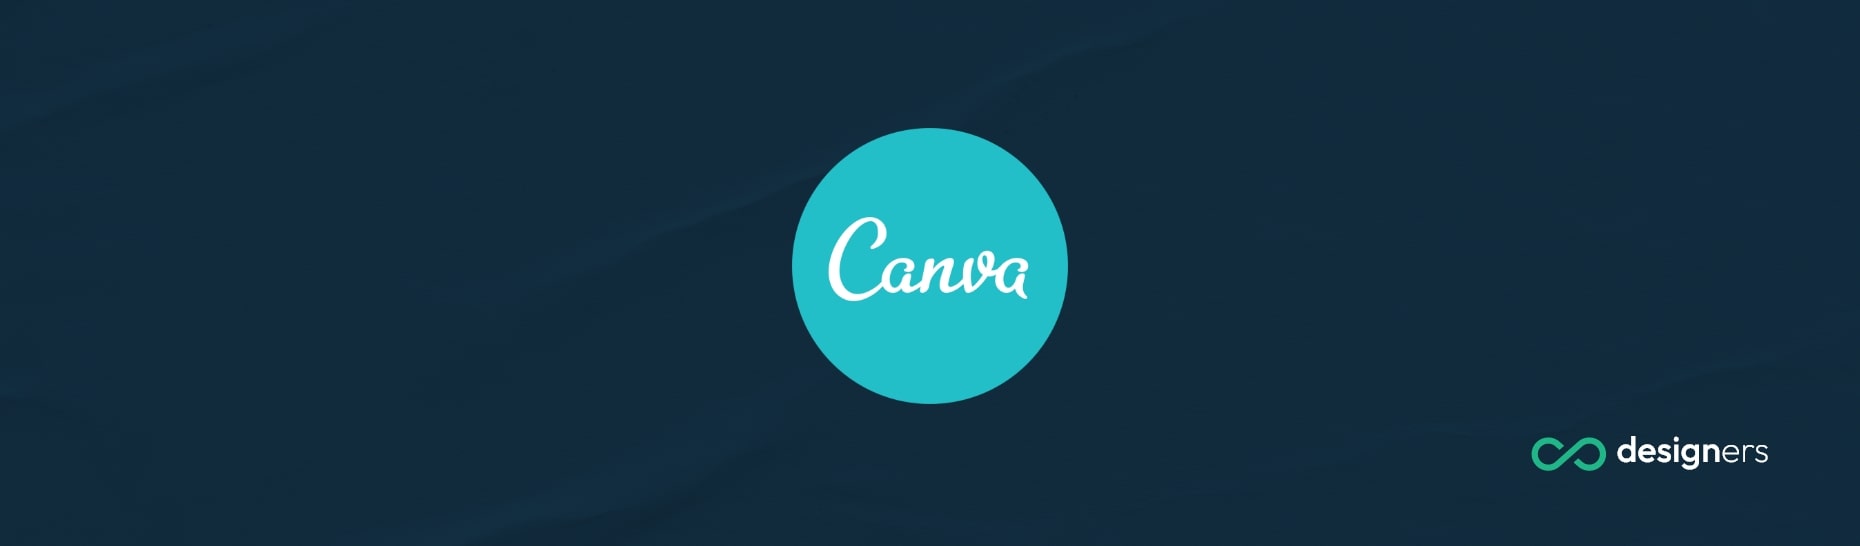 How Do I Get Free Canva Credits? 